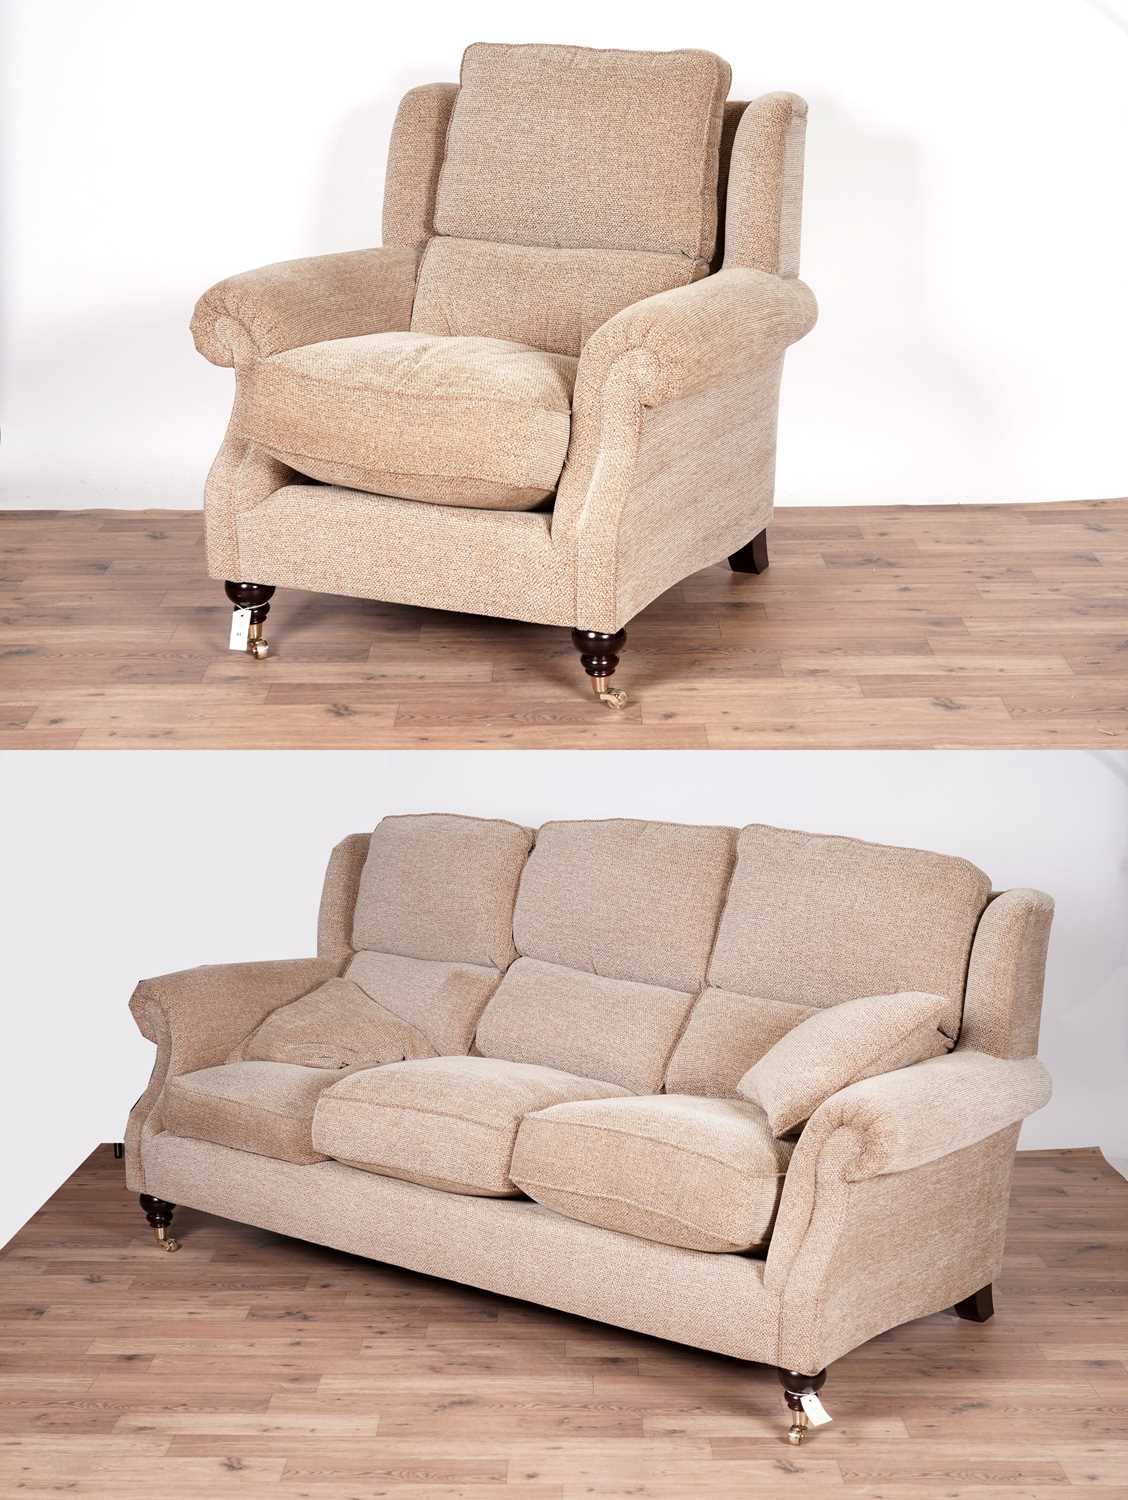 A Parker Knoll sofa and armchair